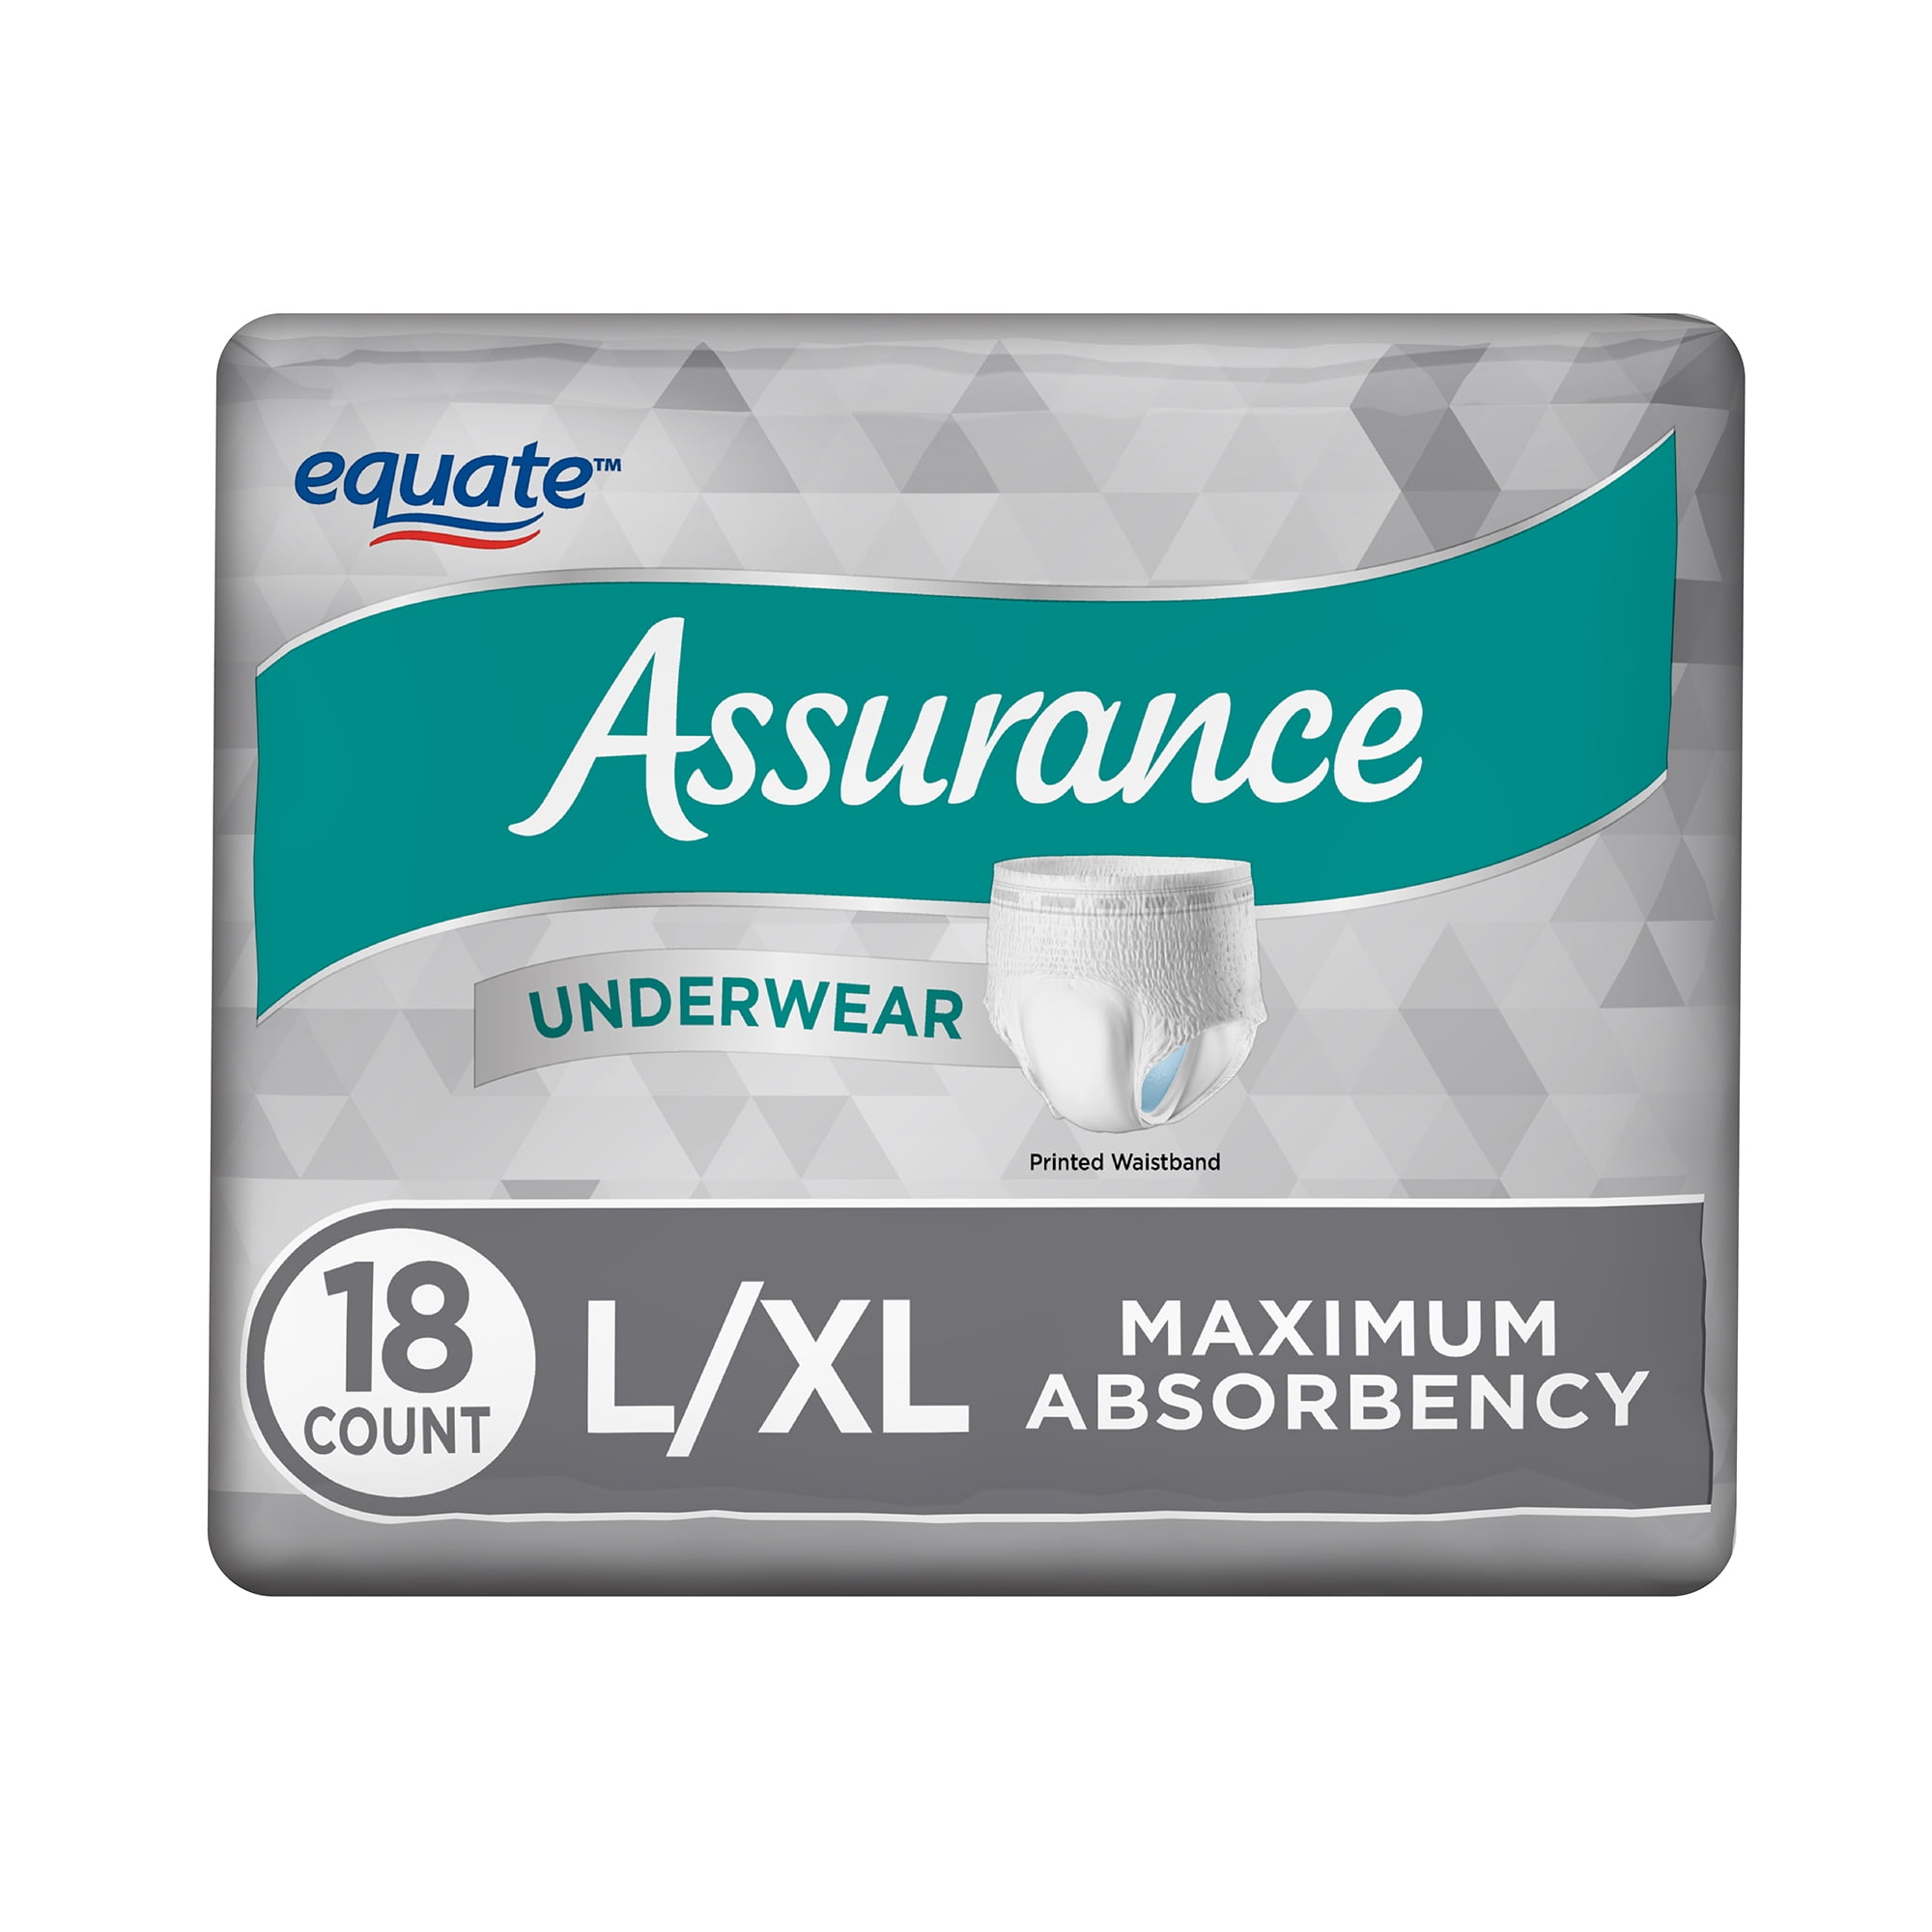 Assurance Underwear for Men, Size L/XL, 18 Count - Walmart.com ...